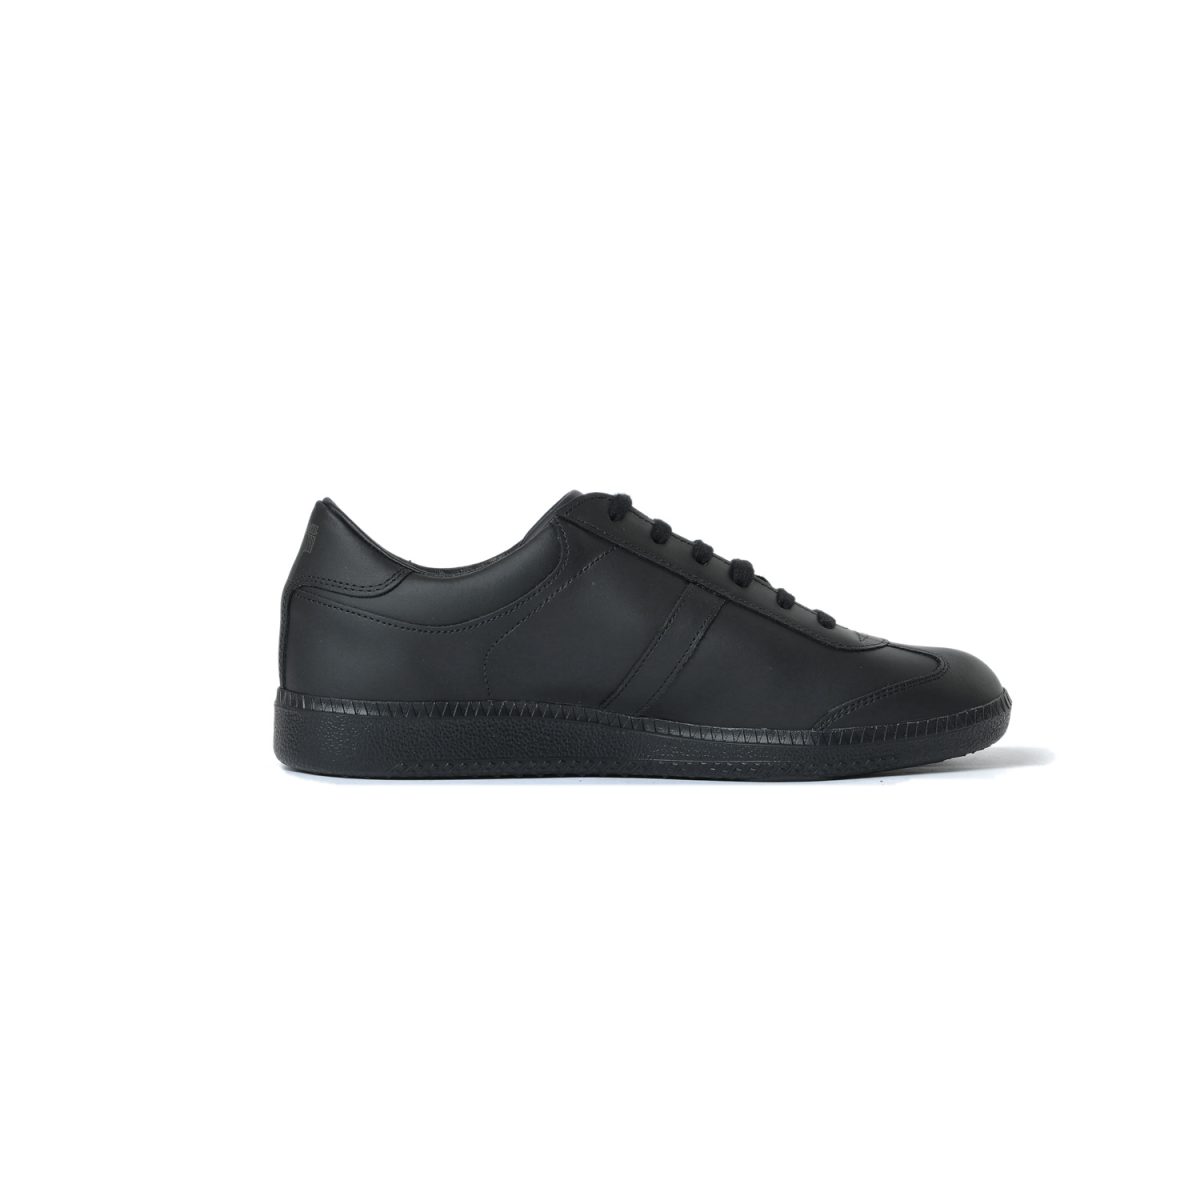 Tisza cipő - Compakt - Fekete